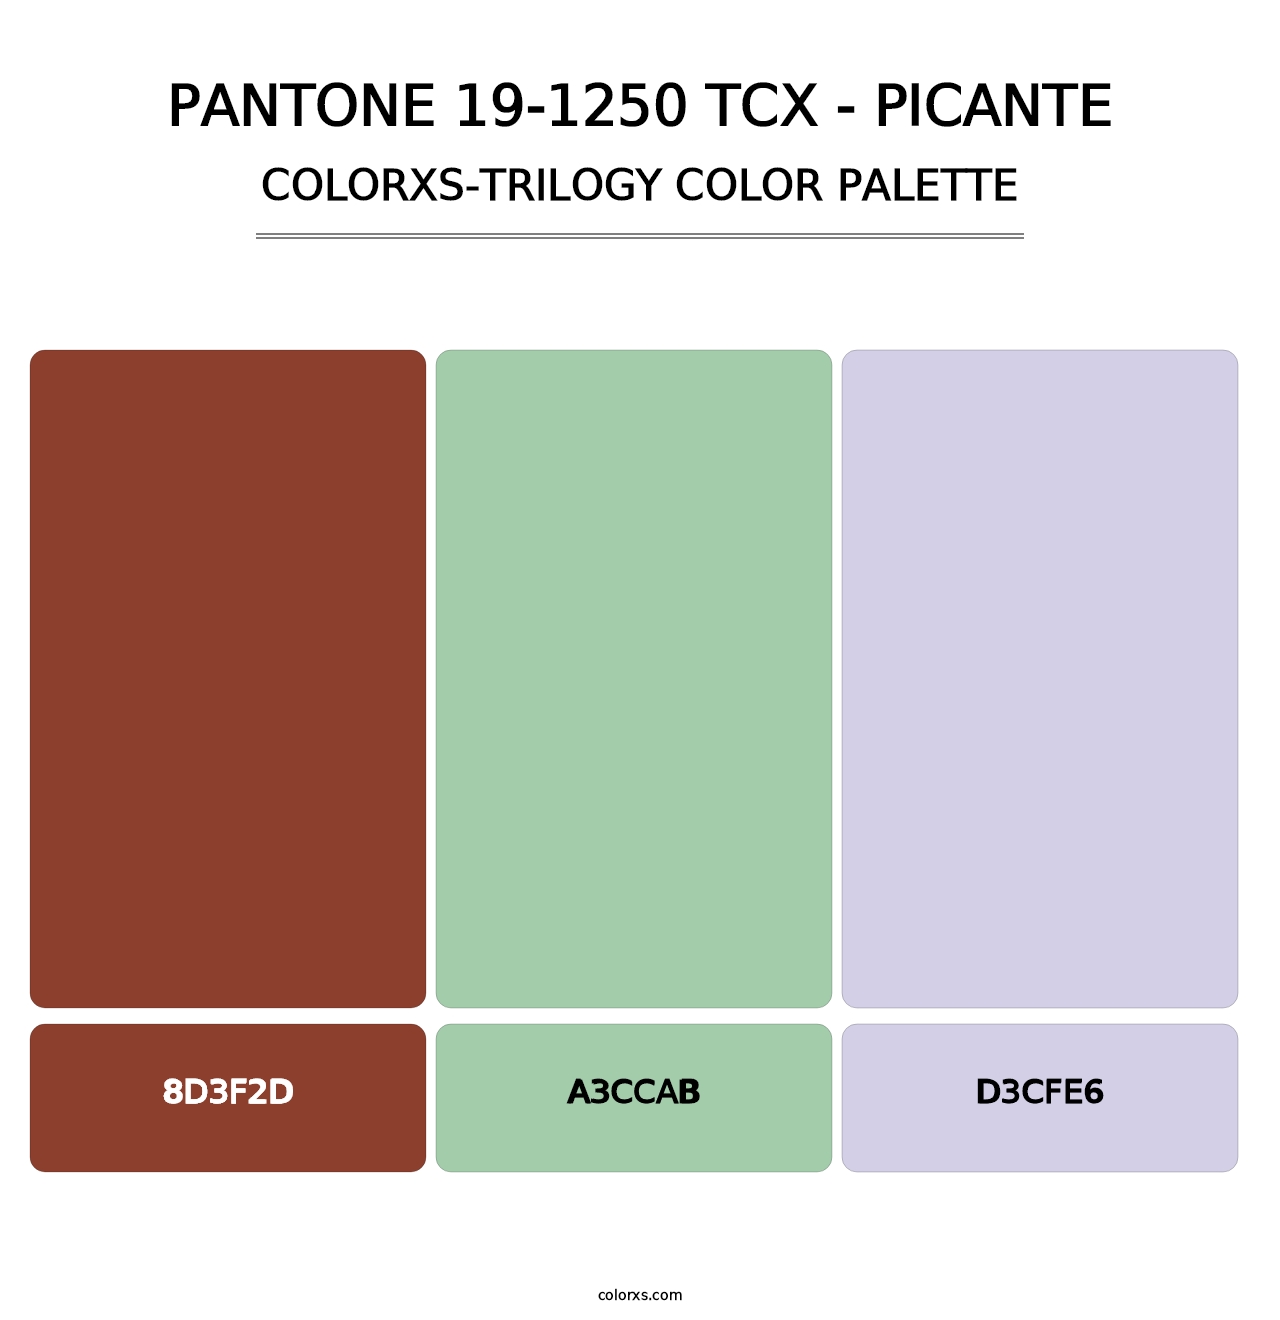 PANTONE 19-1250 TCX - Picante - Colorxs Trilogy Palette